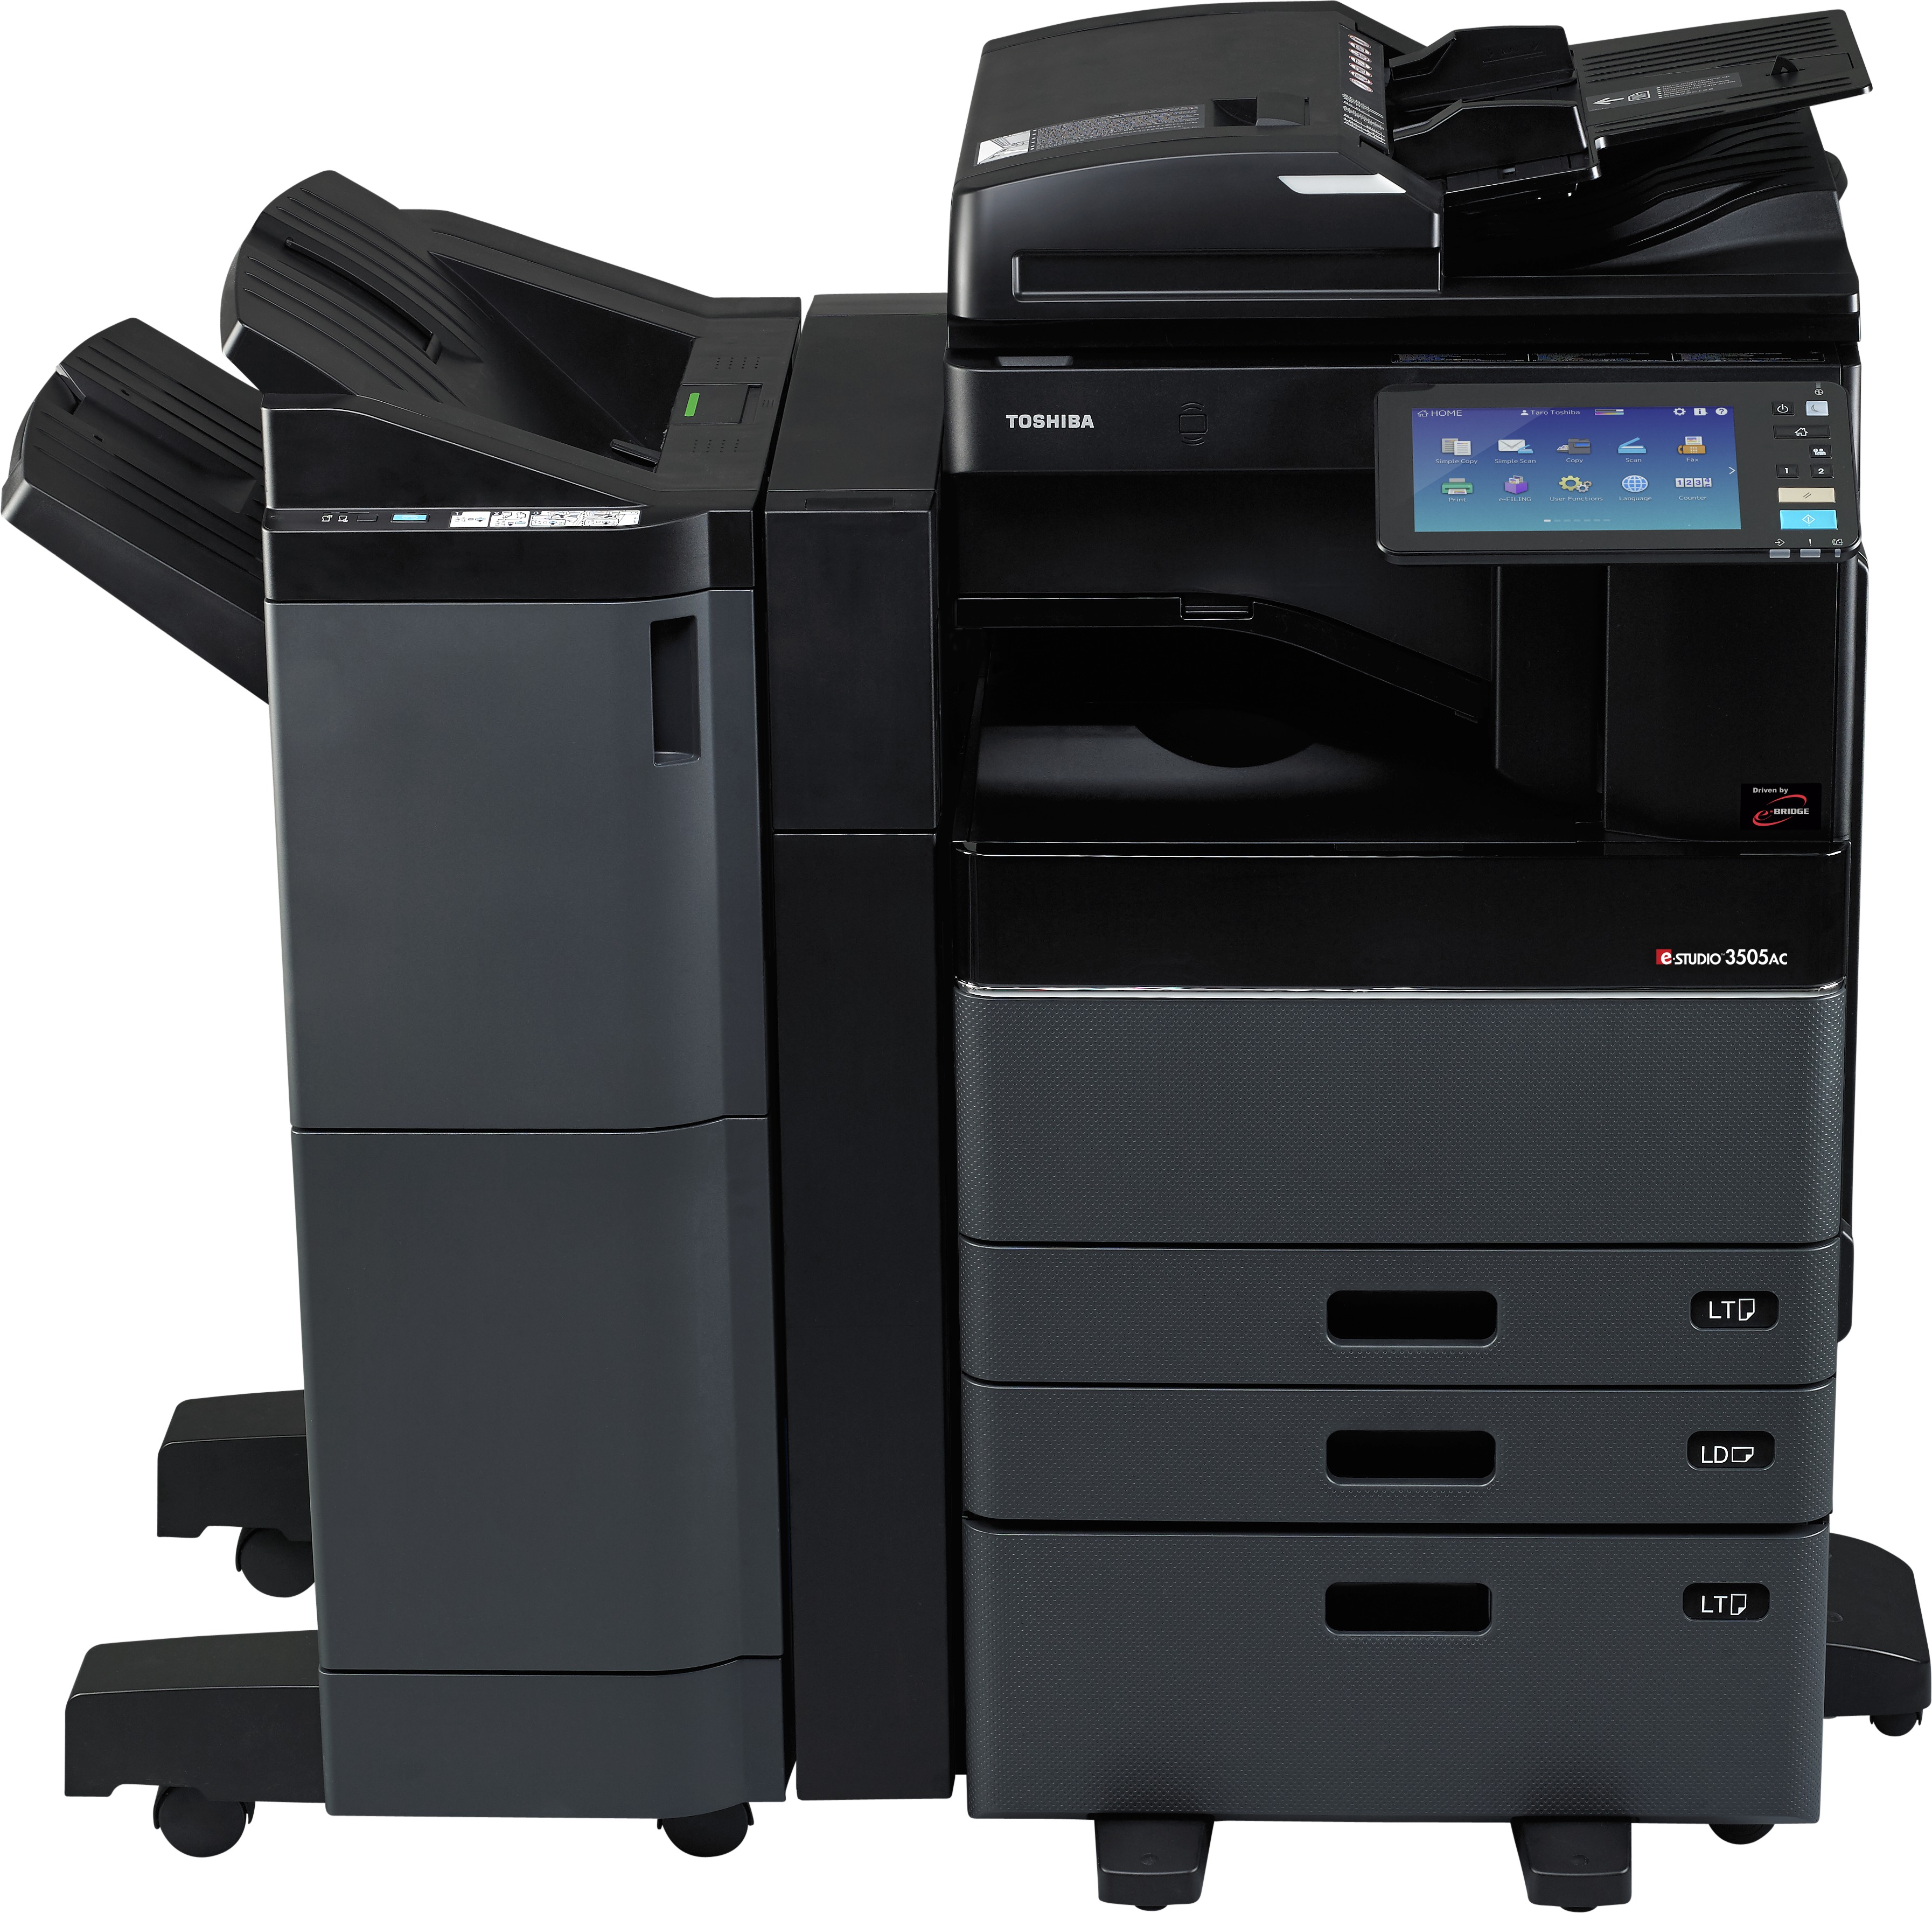 Toshiba e-Studio 3505AC Copier/Printer